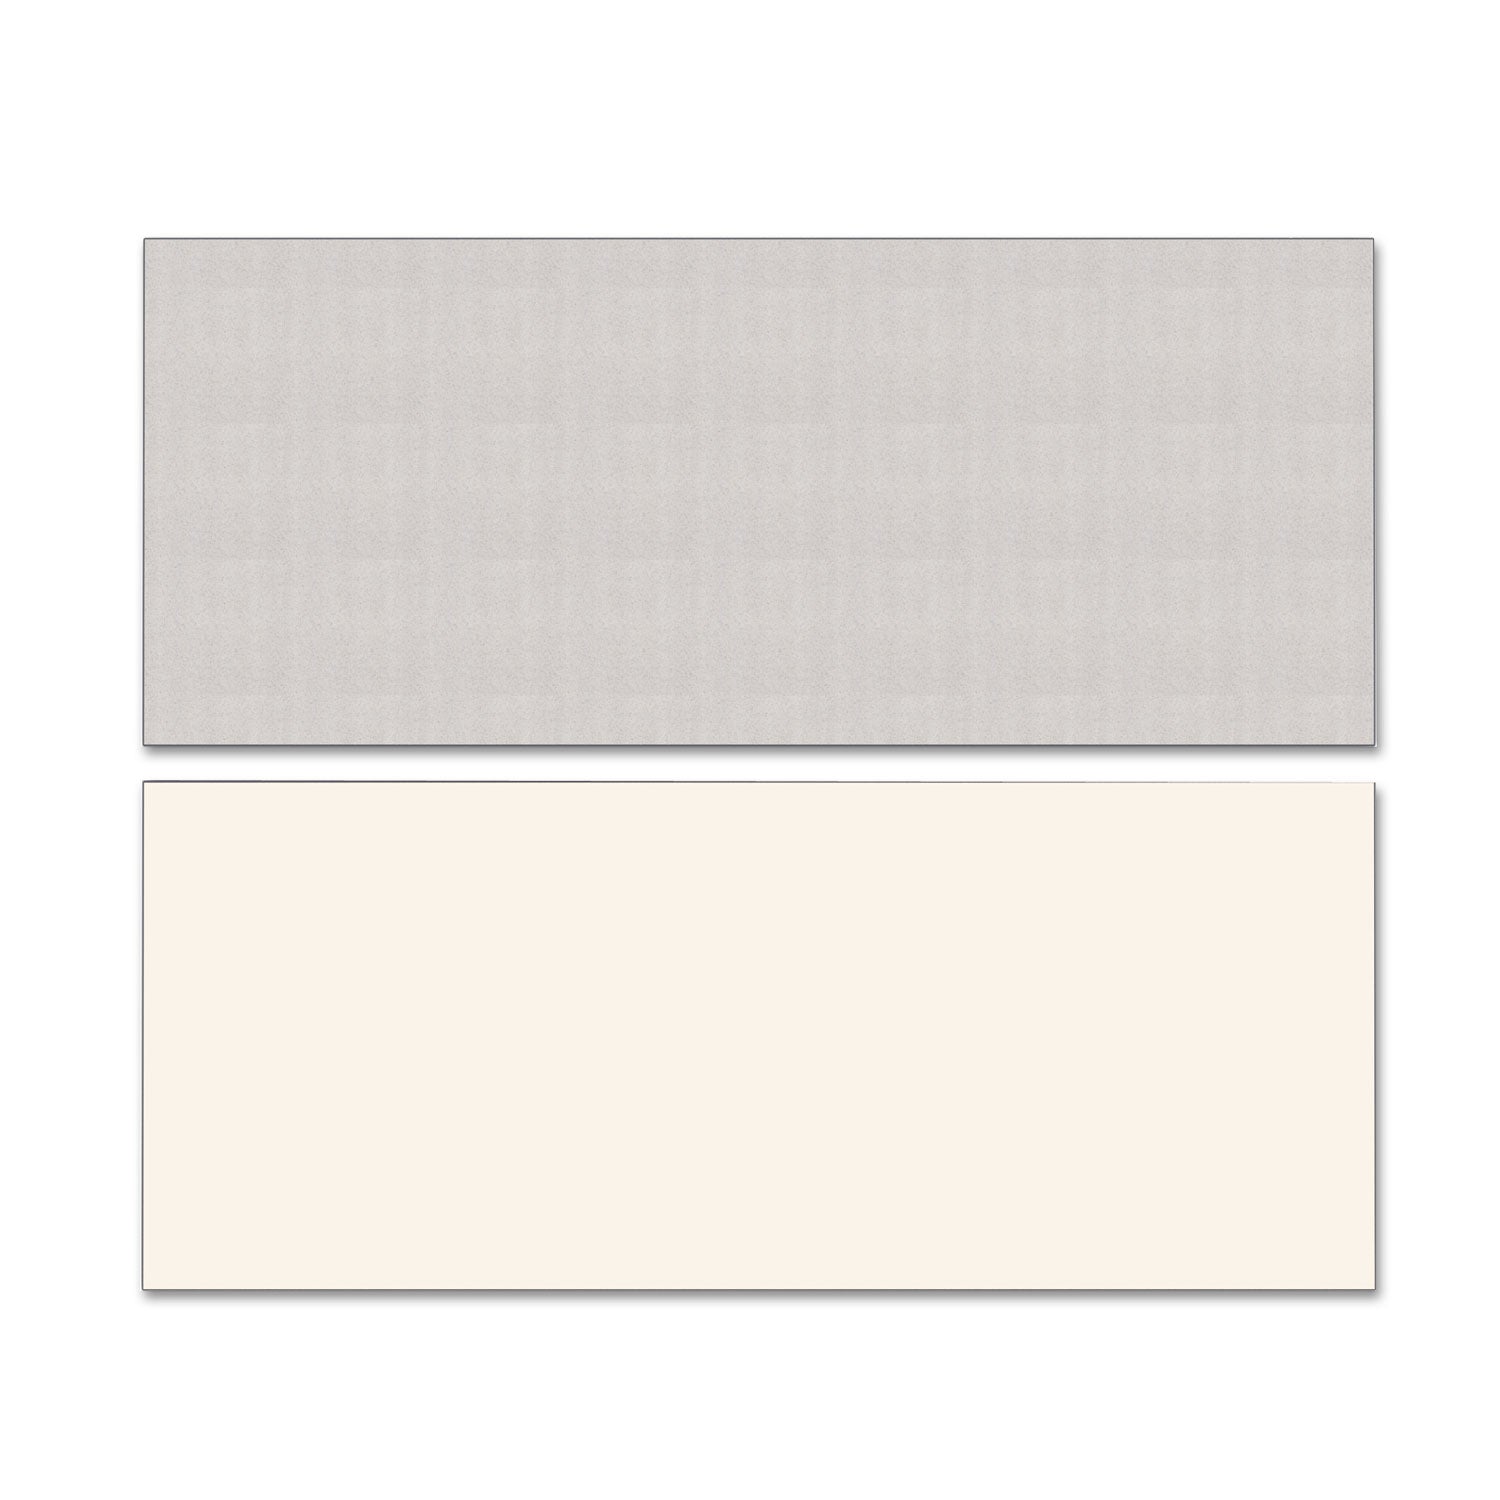 reversible-laminate-table-top-rectangular-715w-x-295d-white-gray_alett7230wg - 2